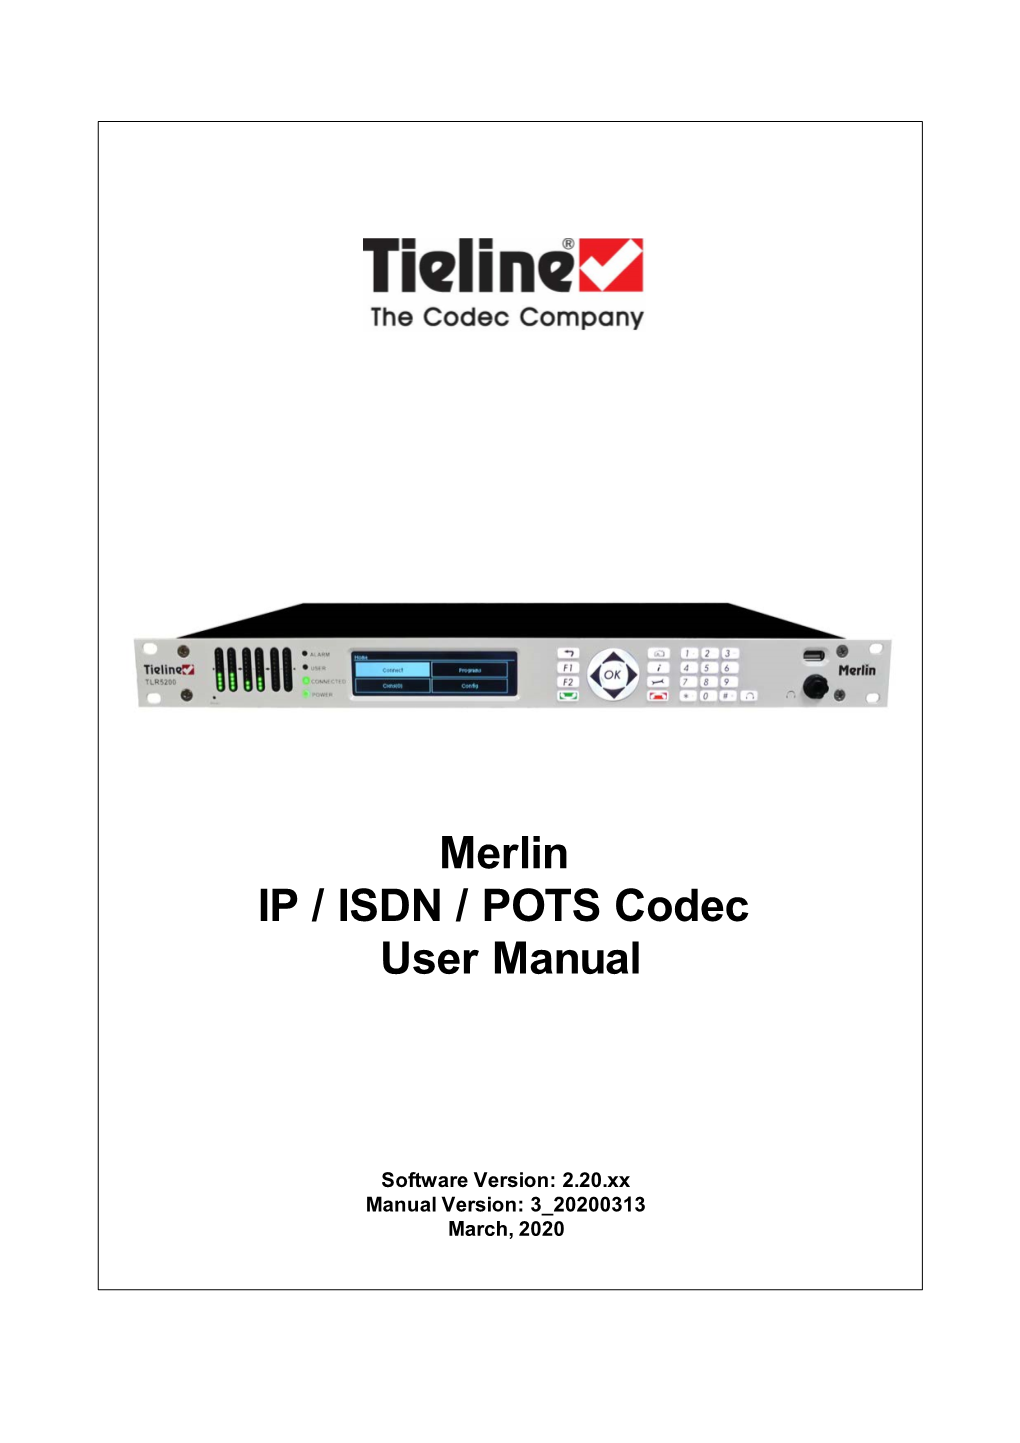 Merlin IP / ISDN / POTS Codec User Manual